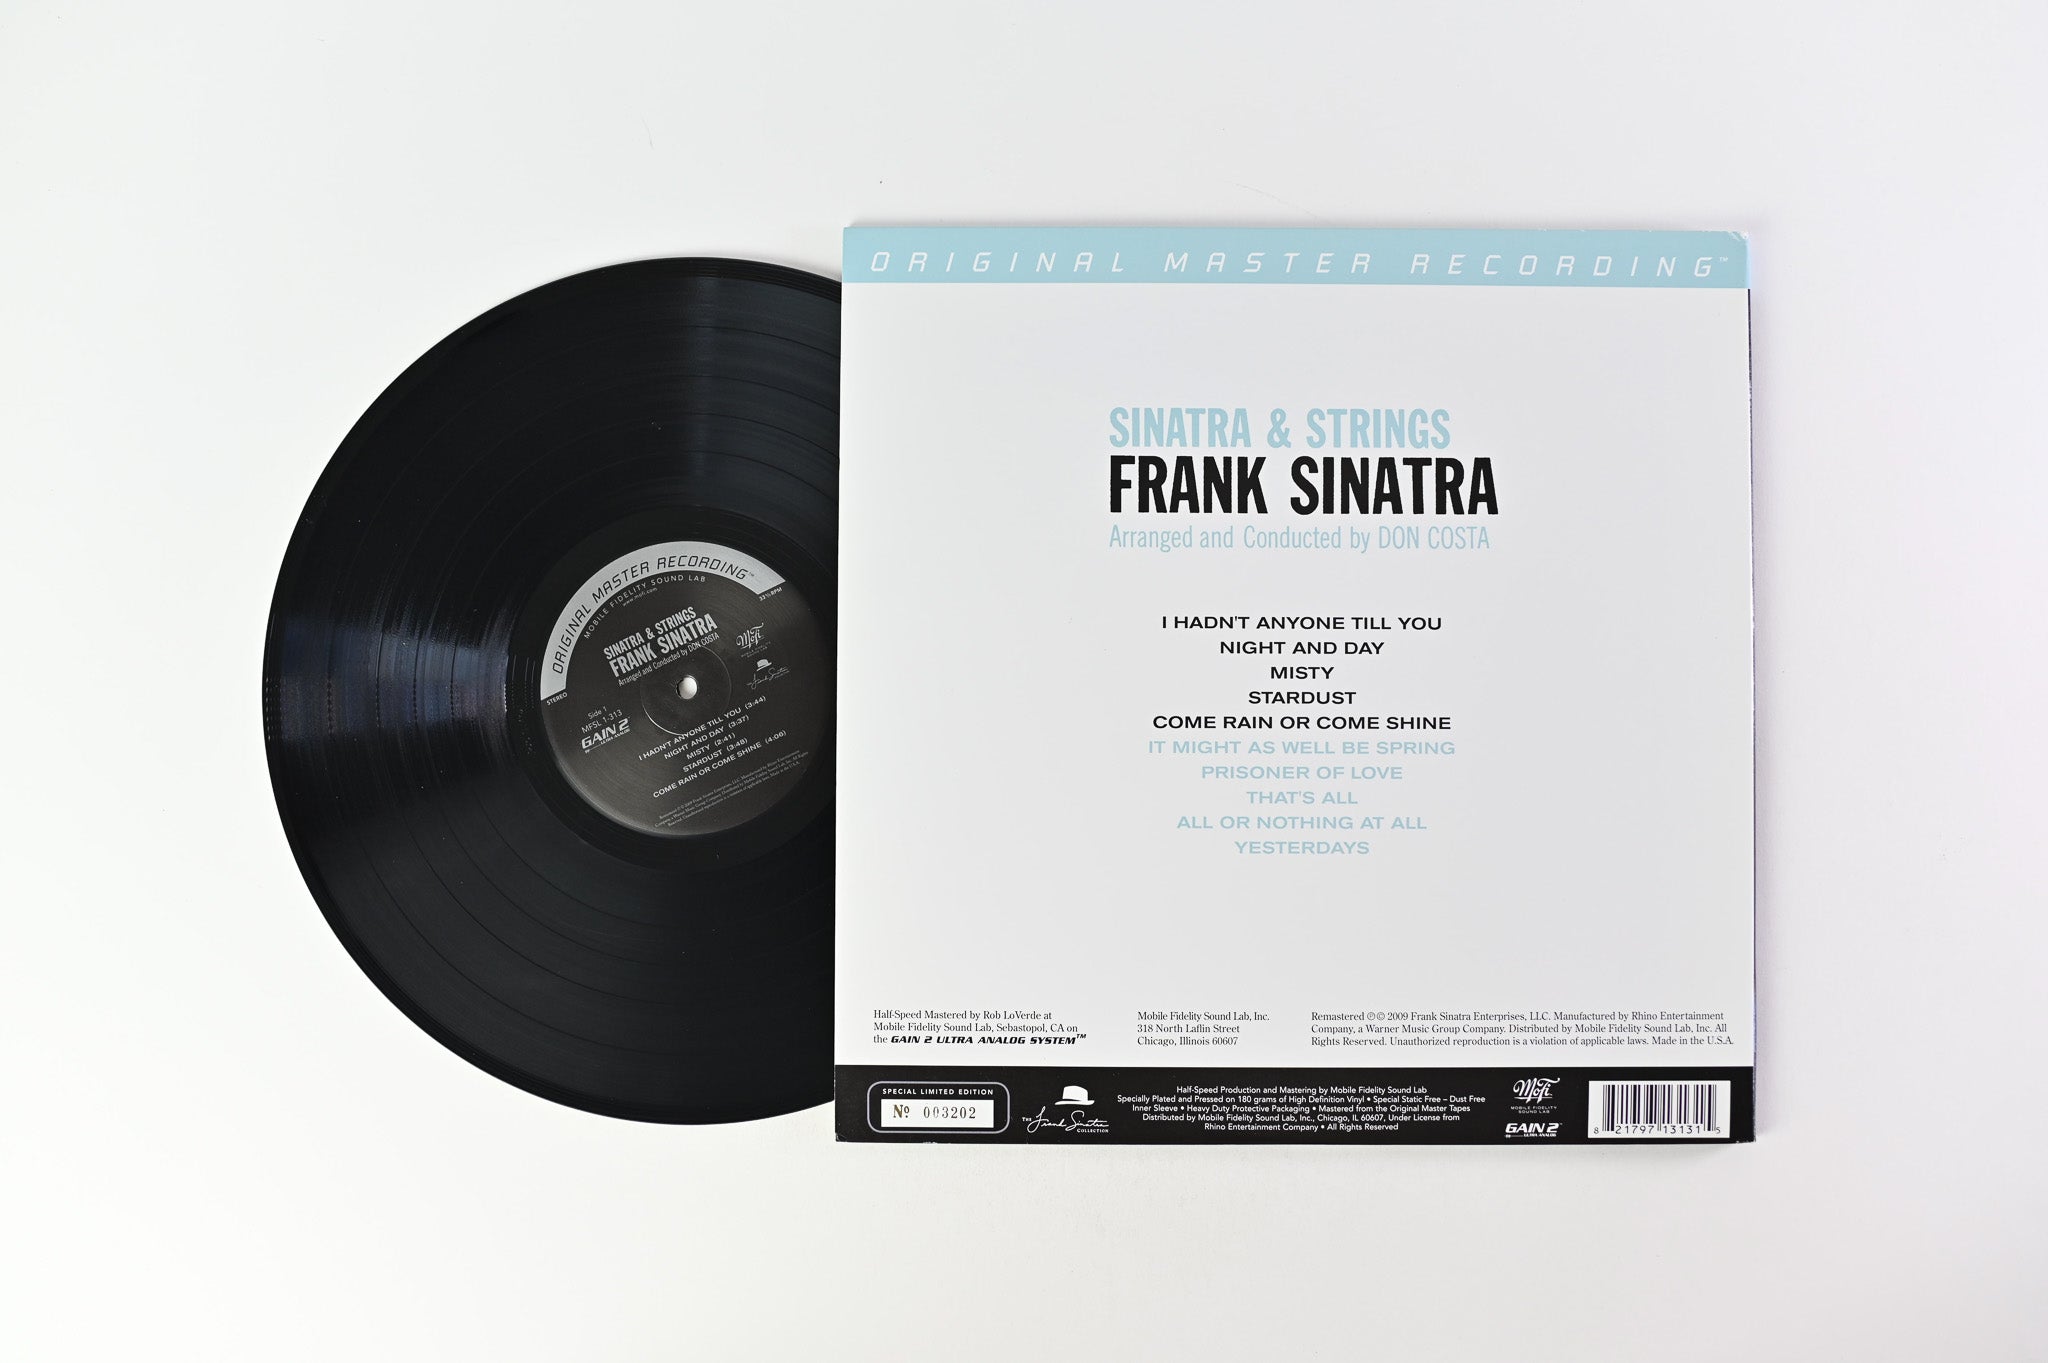 Frank Sinatra - Sinatra & Strings Mobile Fidelity Ultra Analog Ltd Numbered